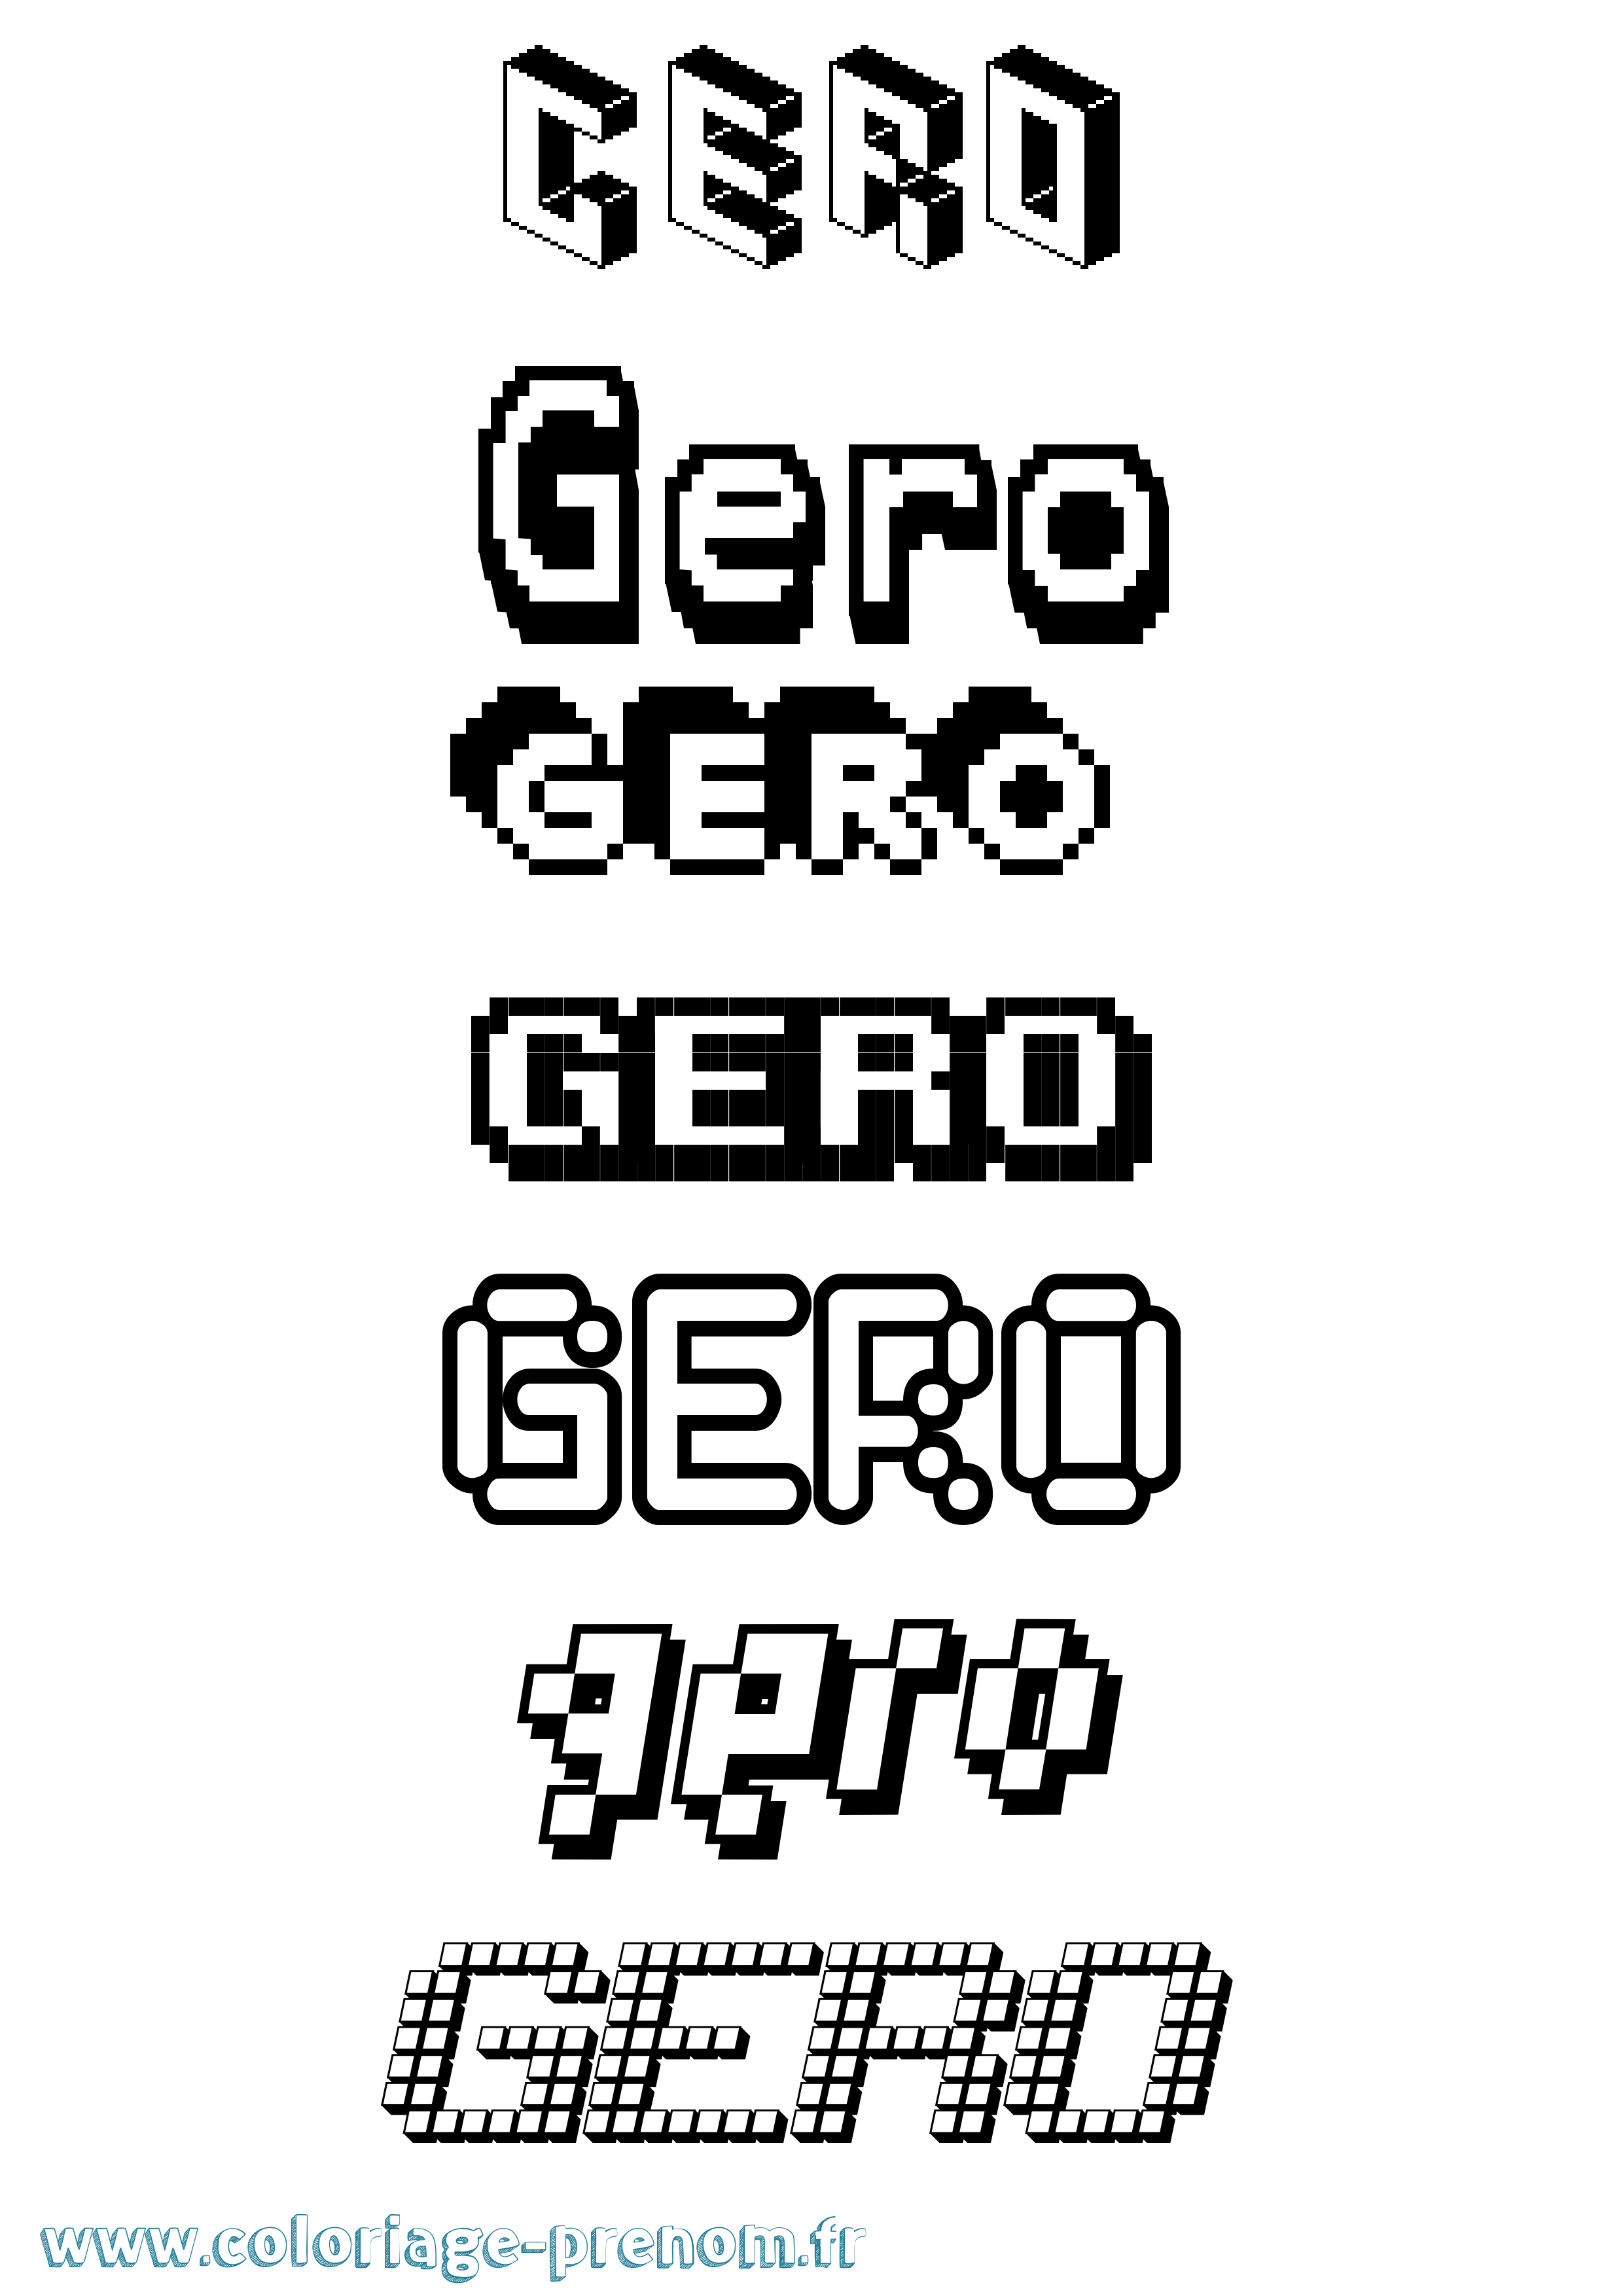 Coloriage prénom Gero Pixel